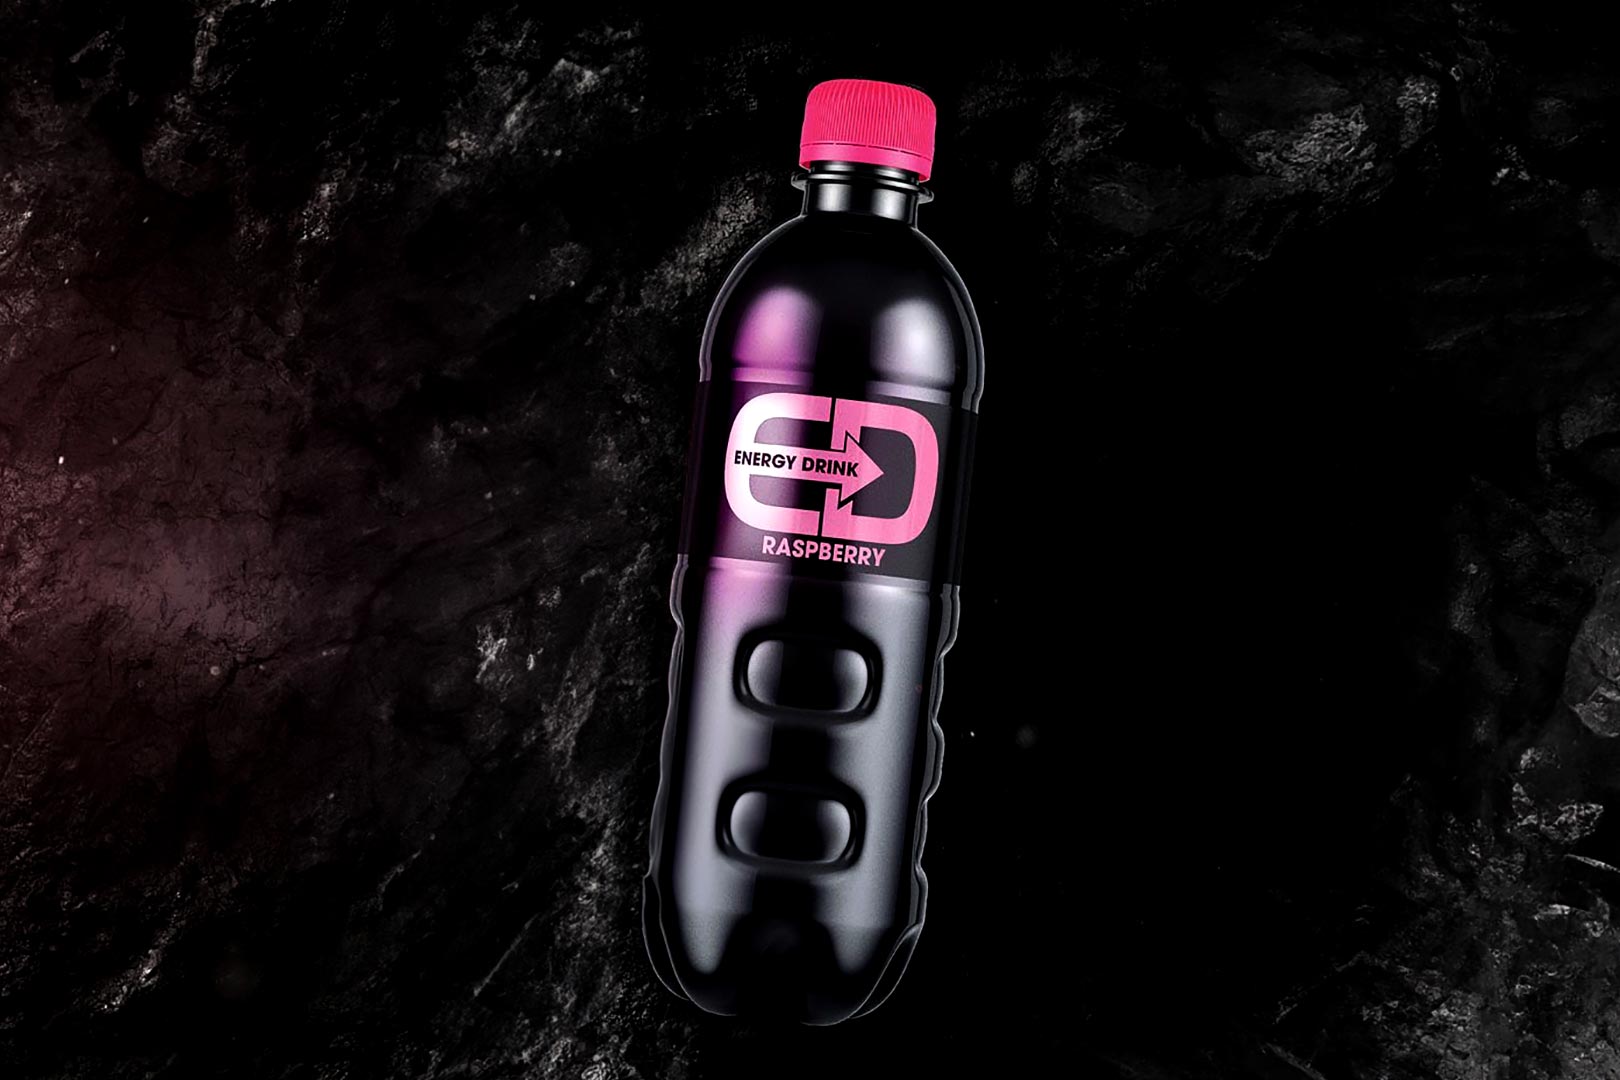 Raspberry Ed Energy Drink